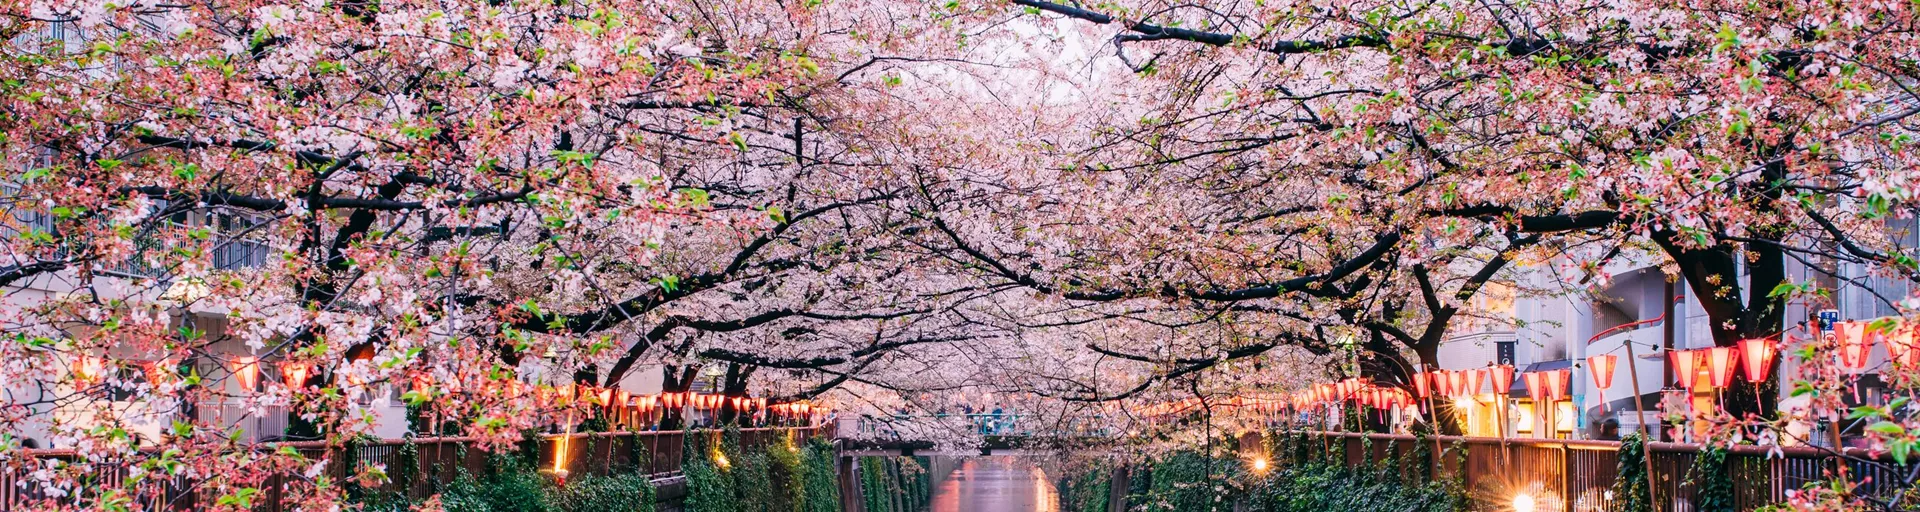 Sakura blooming along the Meguro River in Tokyo, Japan at dusk